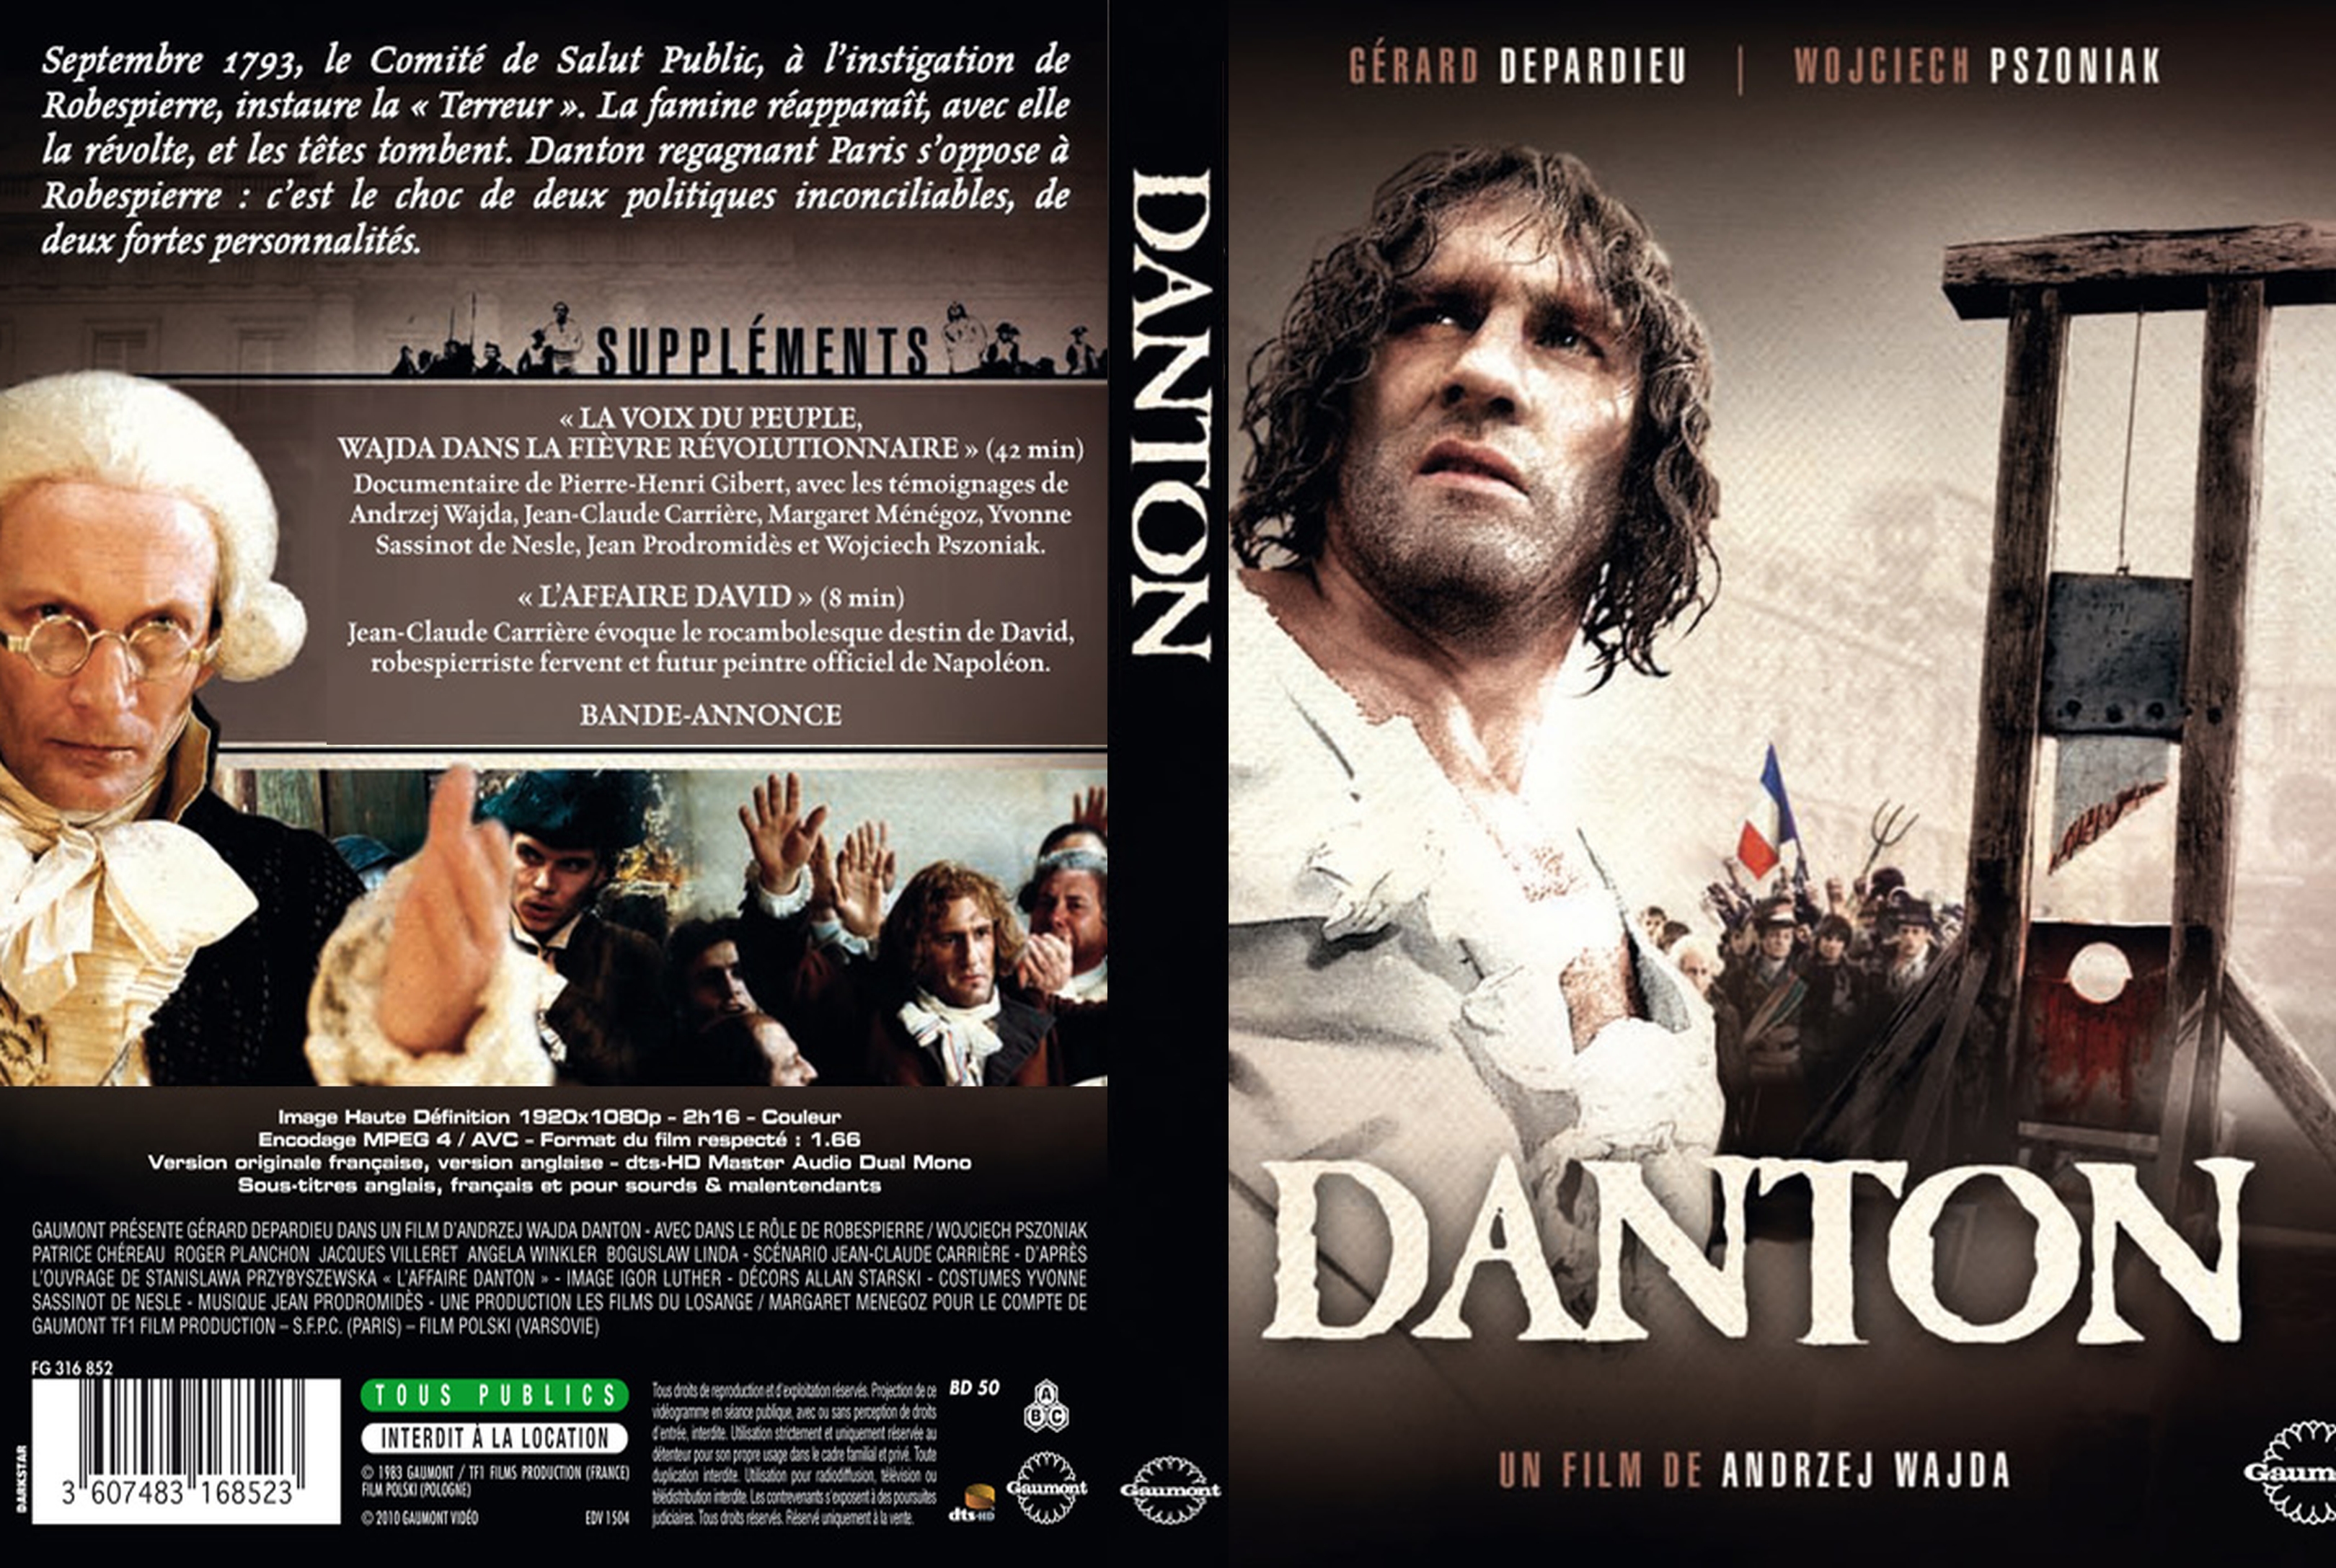 Jaquette DVD Danton